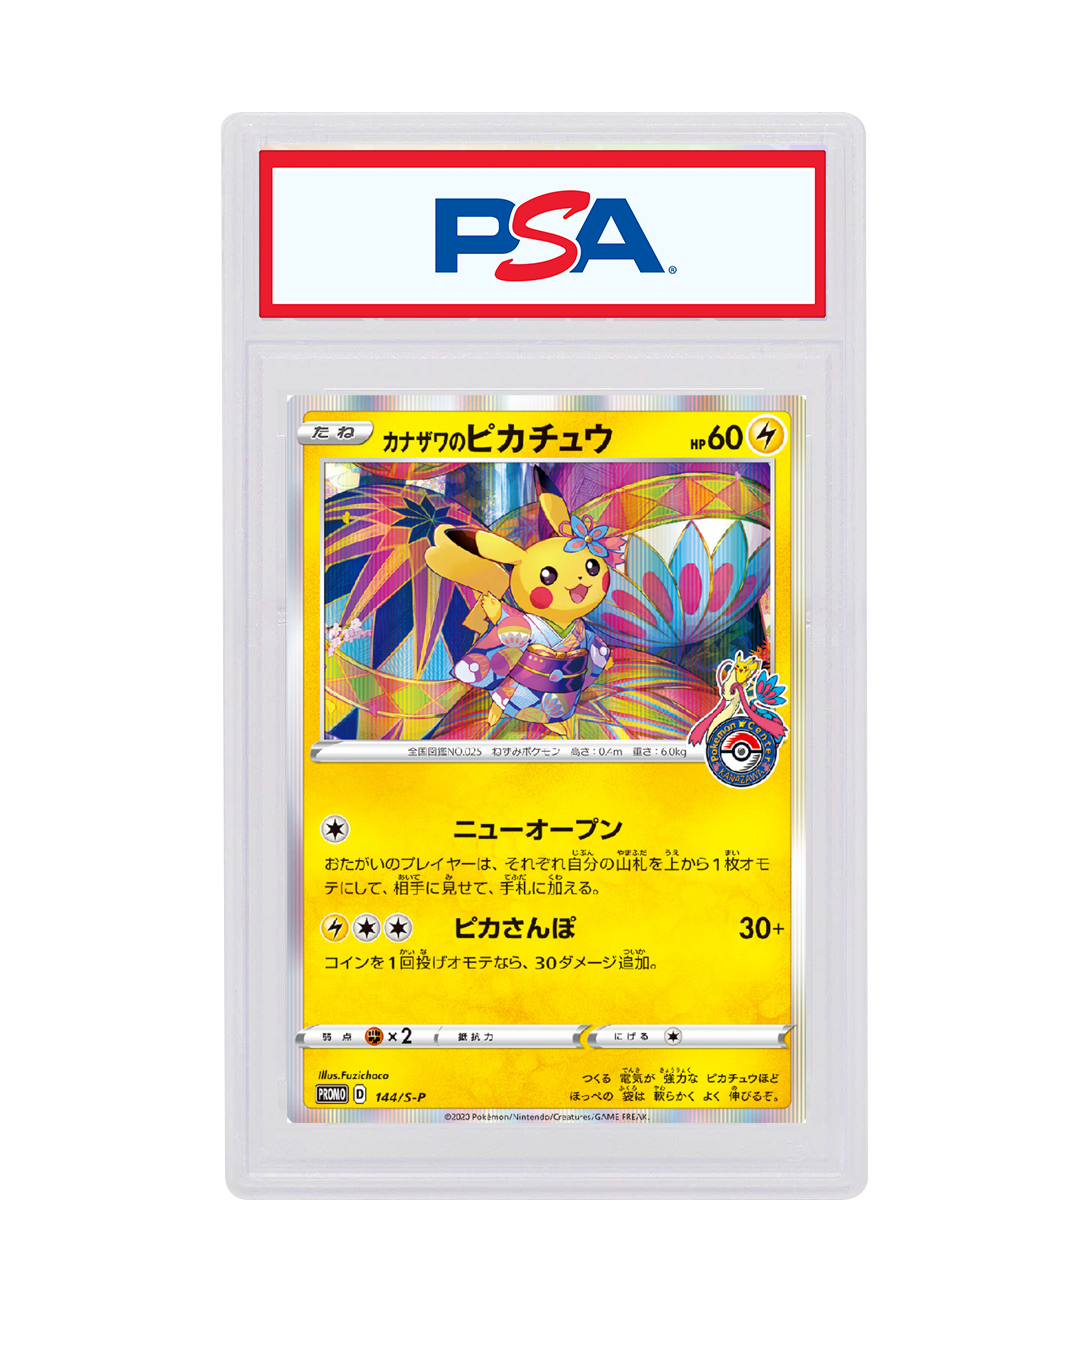 Details about   Pokemon card Kanazawa's Pikachu 144/S-P Pokemon Center Promo Japanese x1 set 